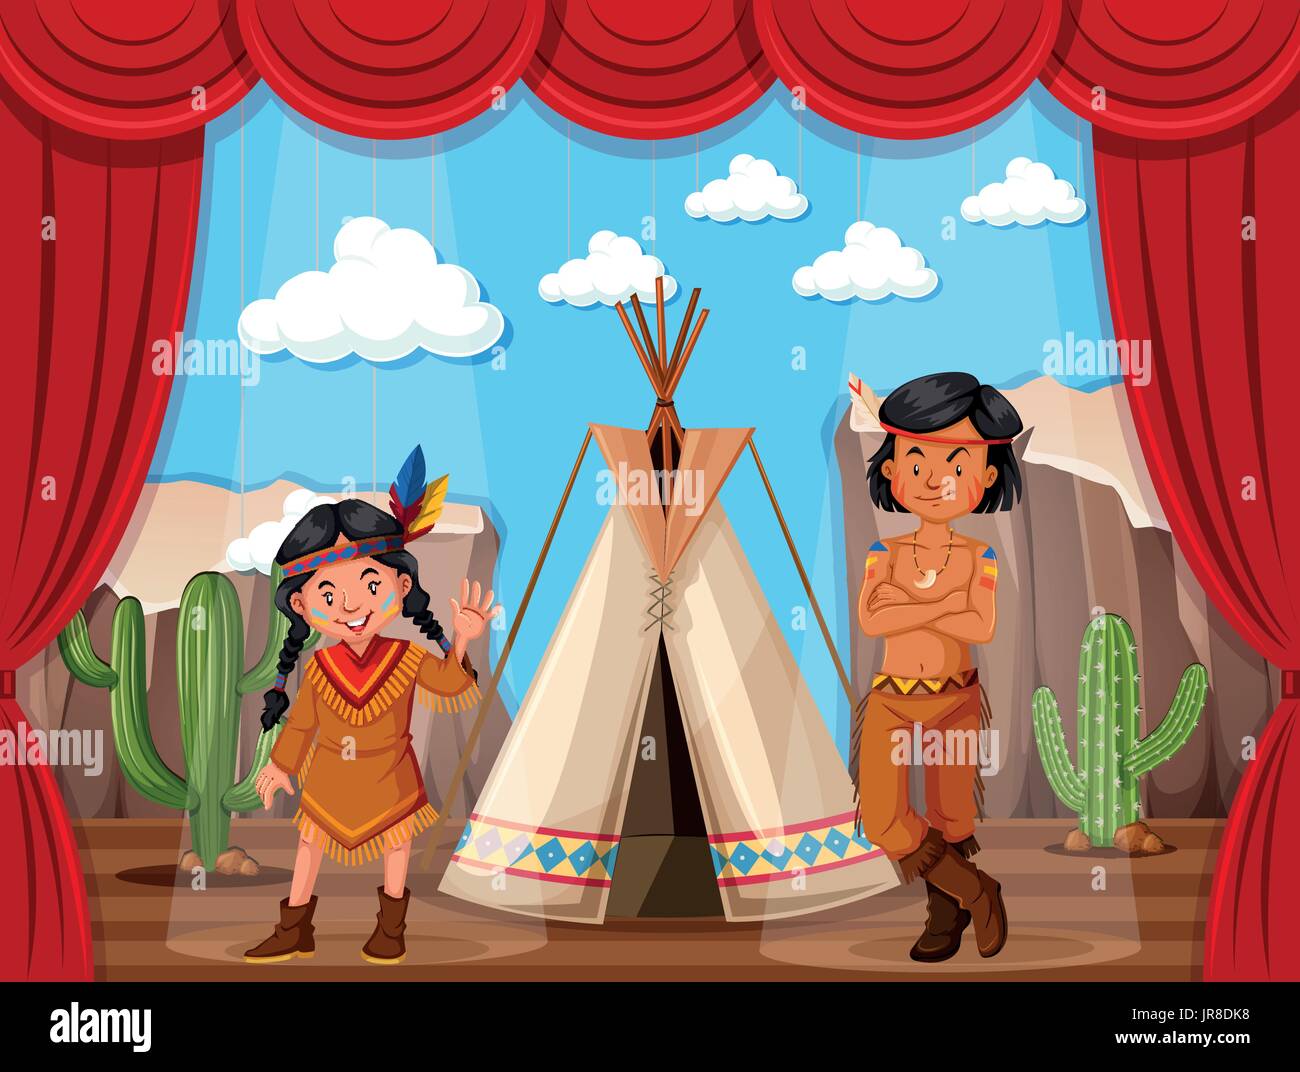 Native americans Rollenspiel auf Bühne illustration Stock Vektor